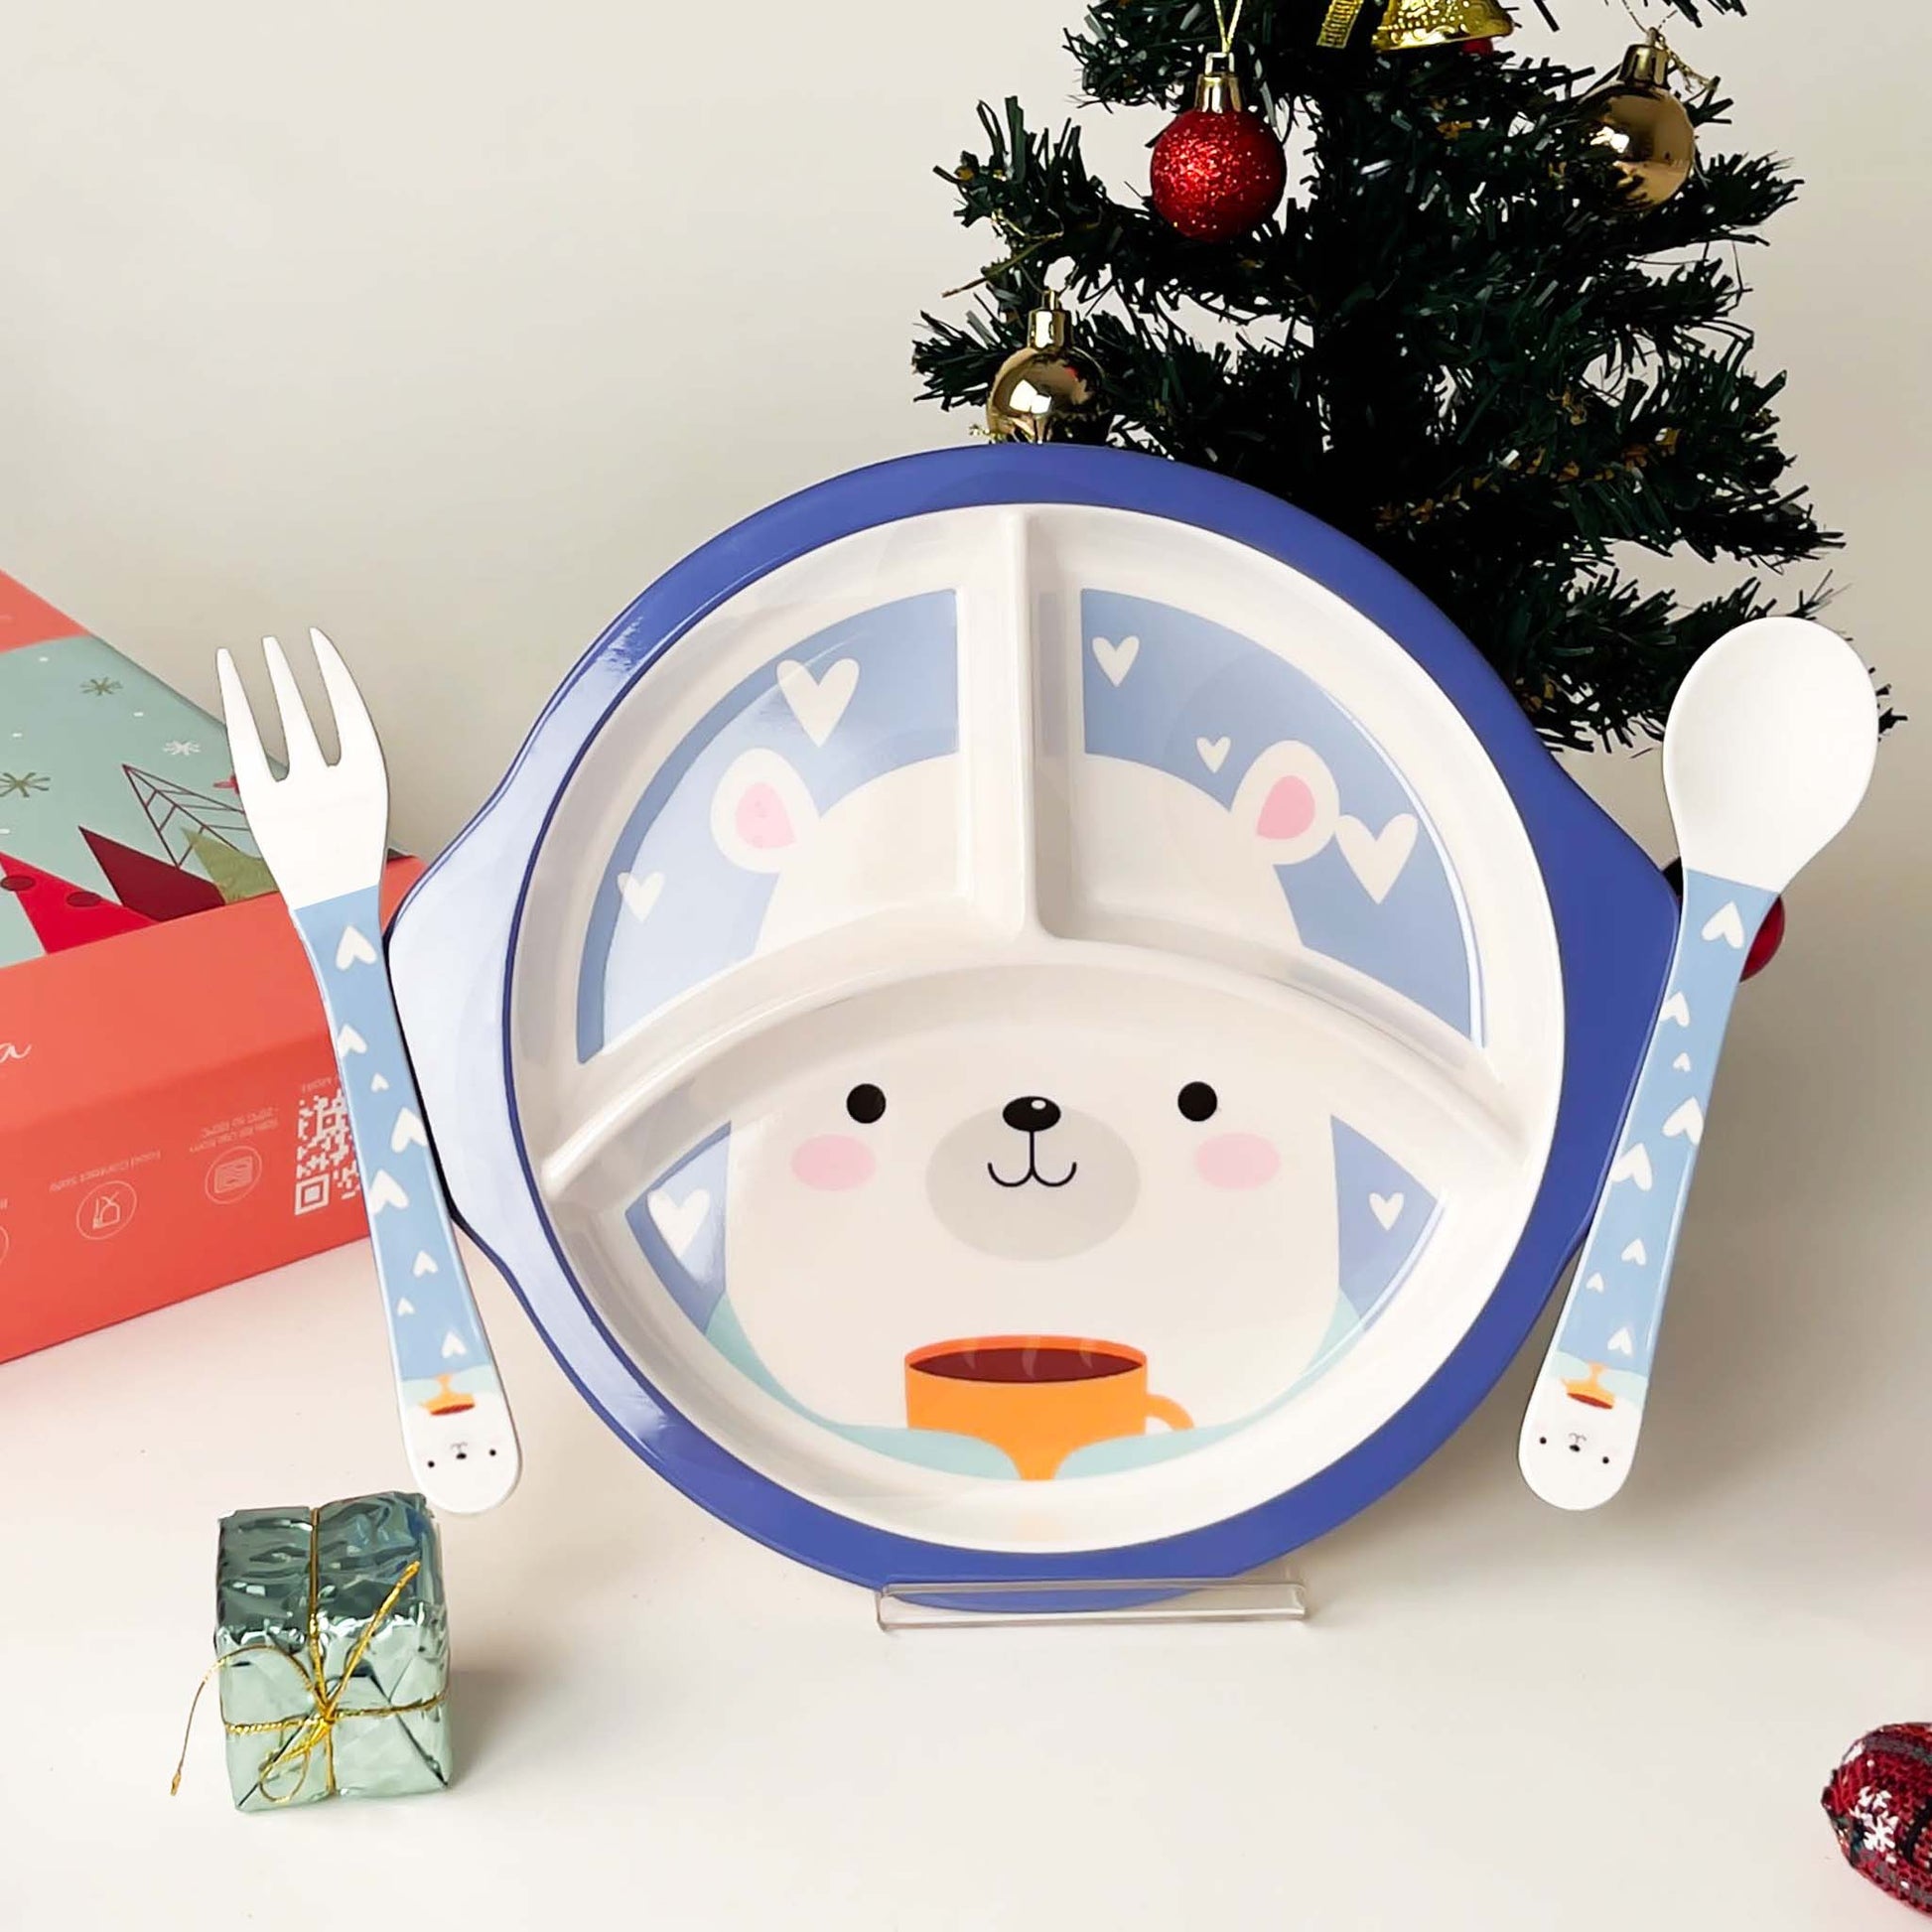 The Plate Story 3 Pcs Children Giftset - Gift of Joy - Bunny